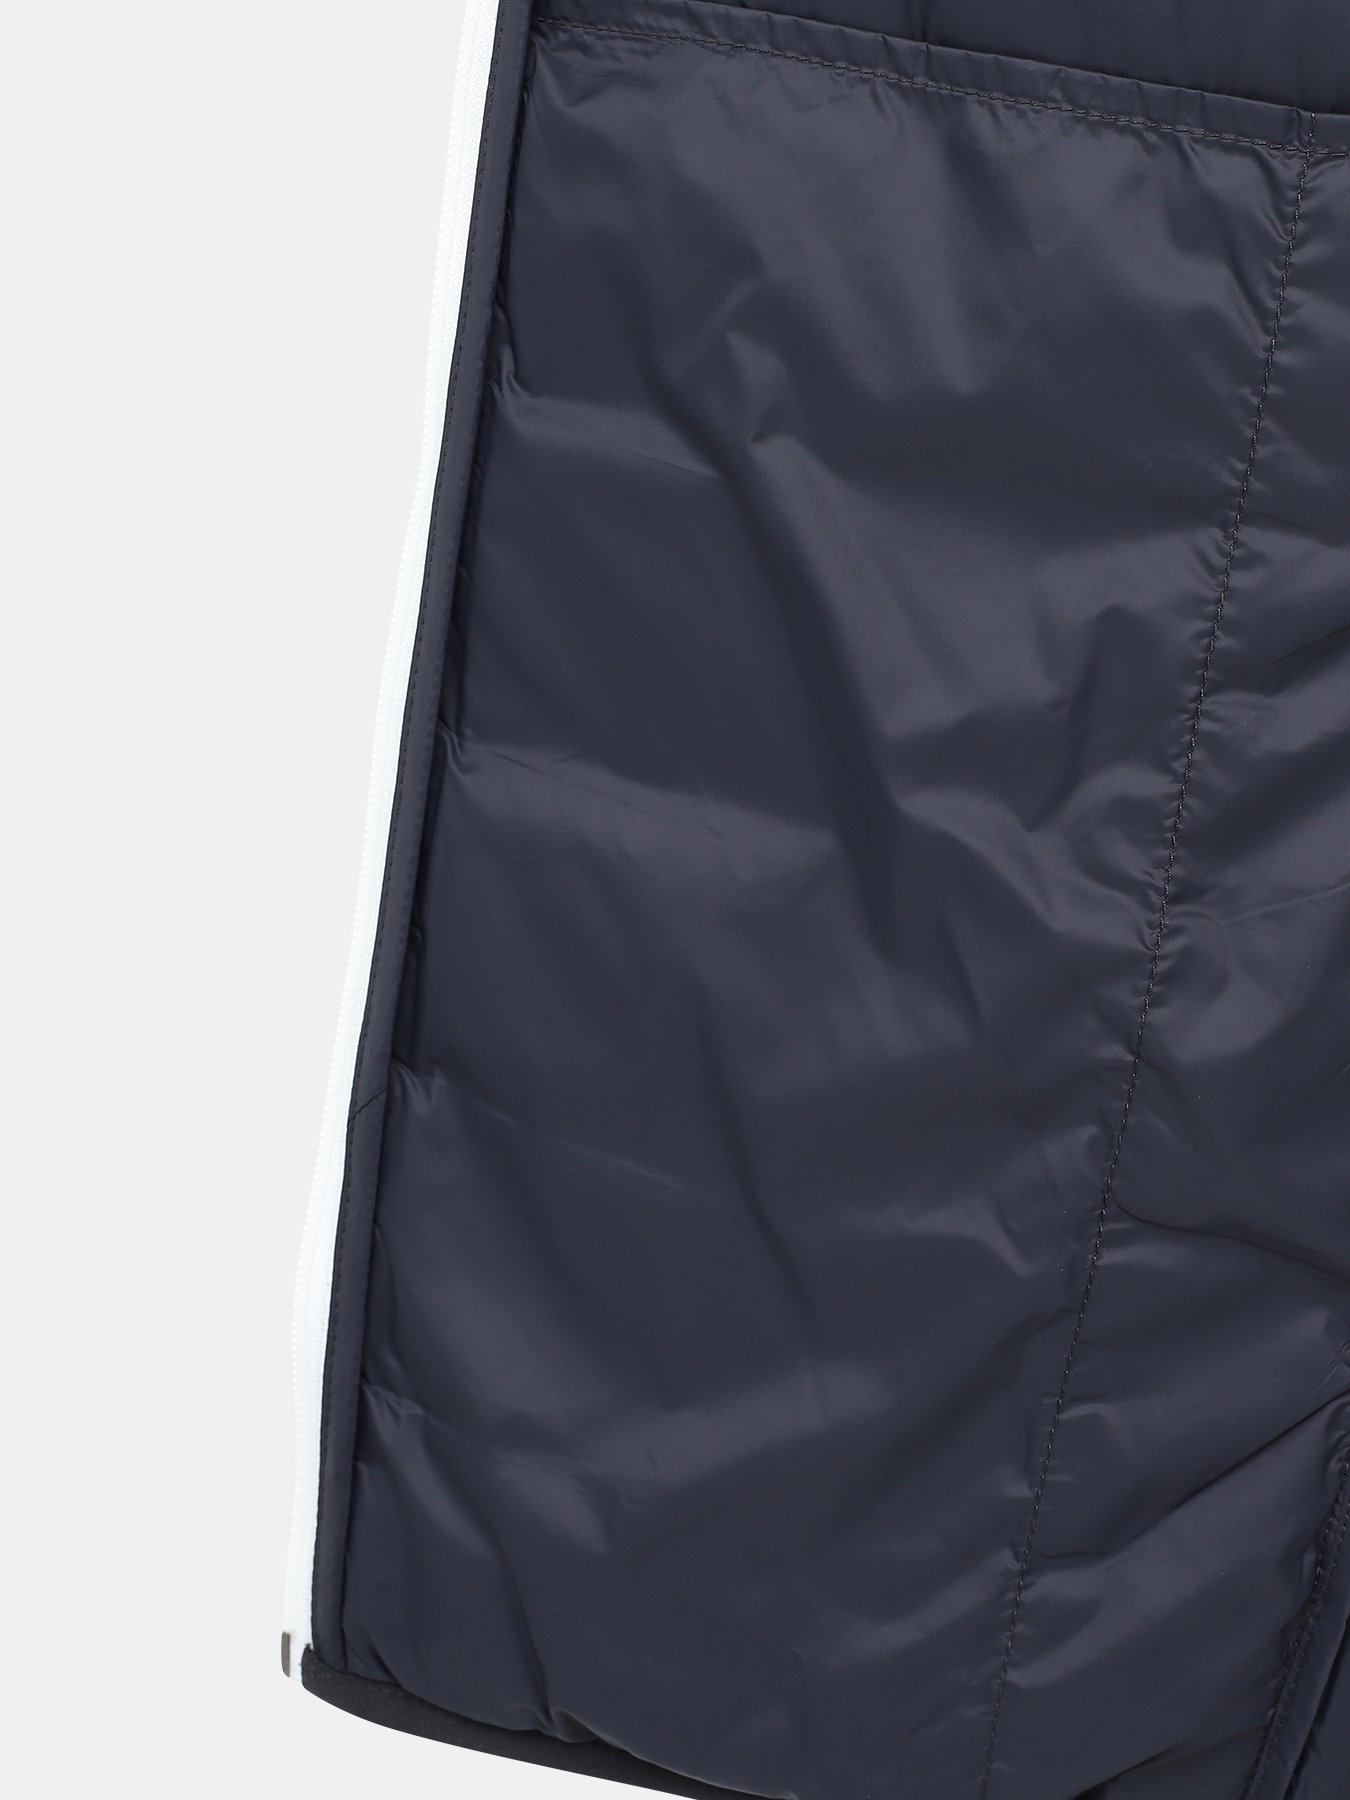 Куртка J Thor BOSS 421191-045, цвет темно-синий, размер 52-54 - фото 5